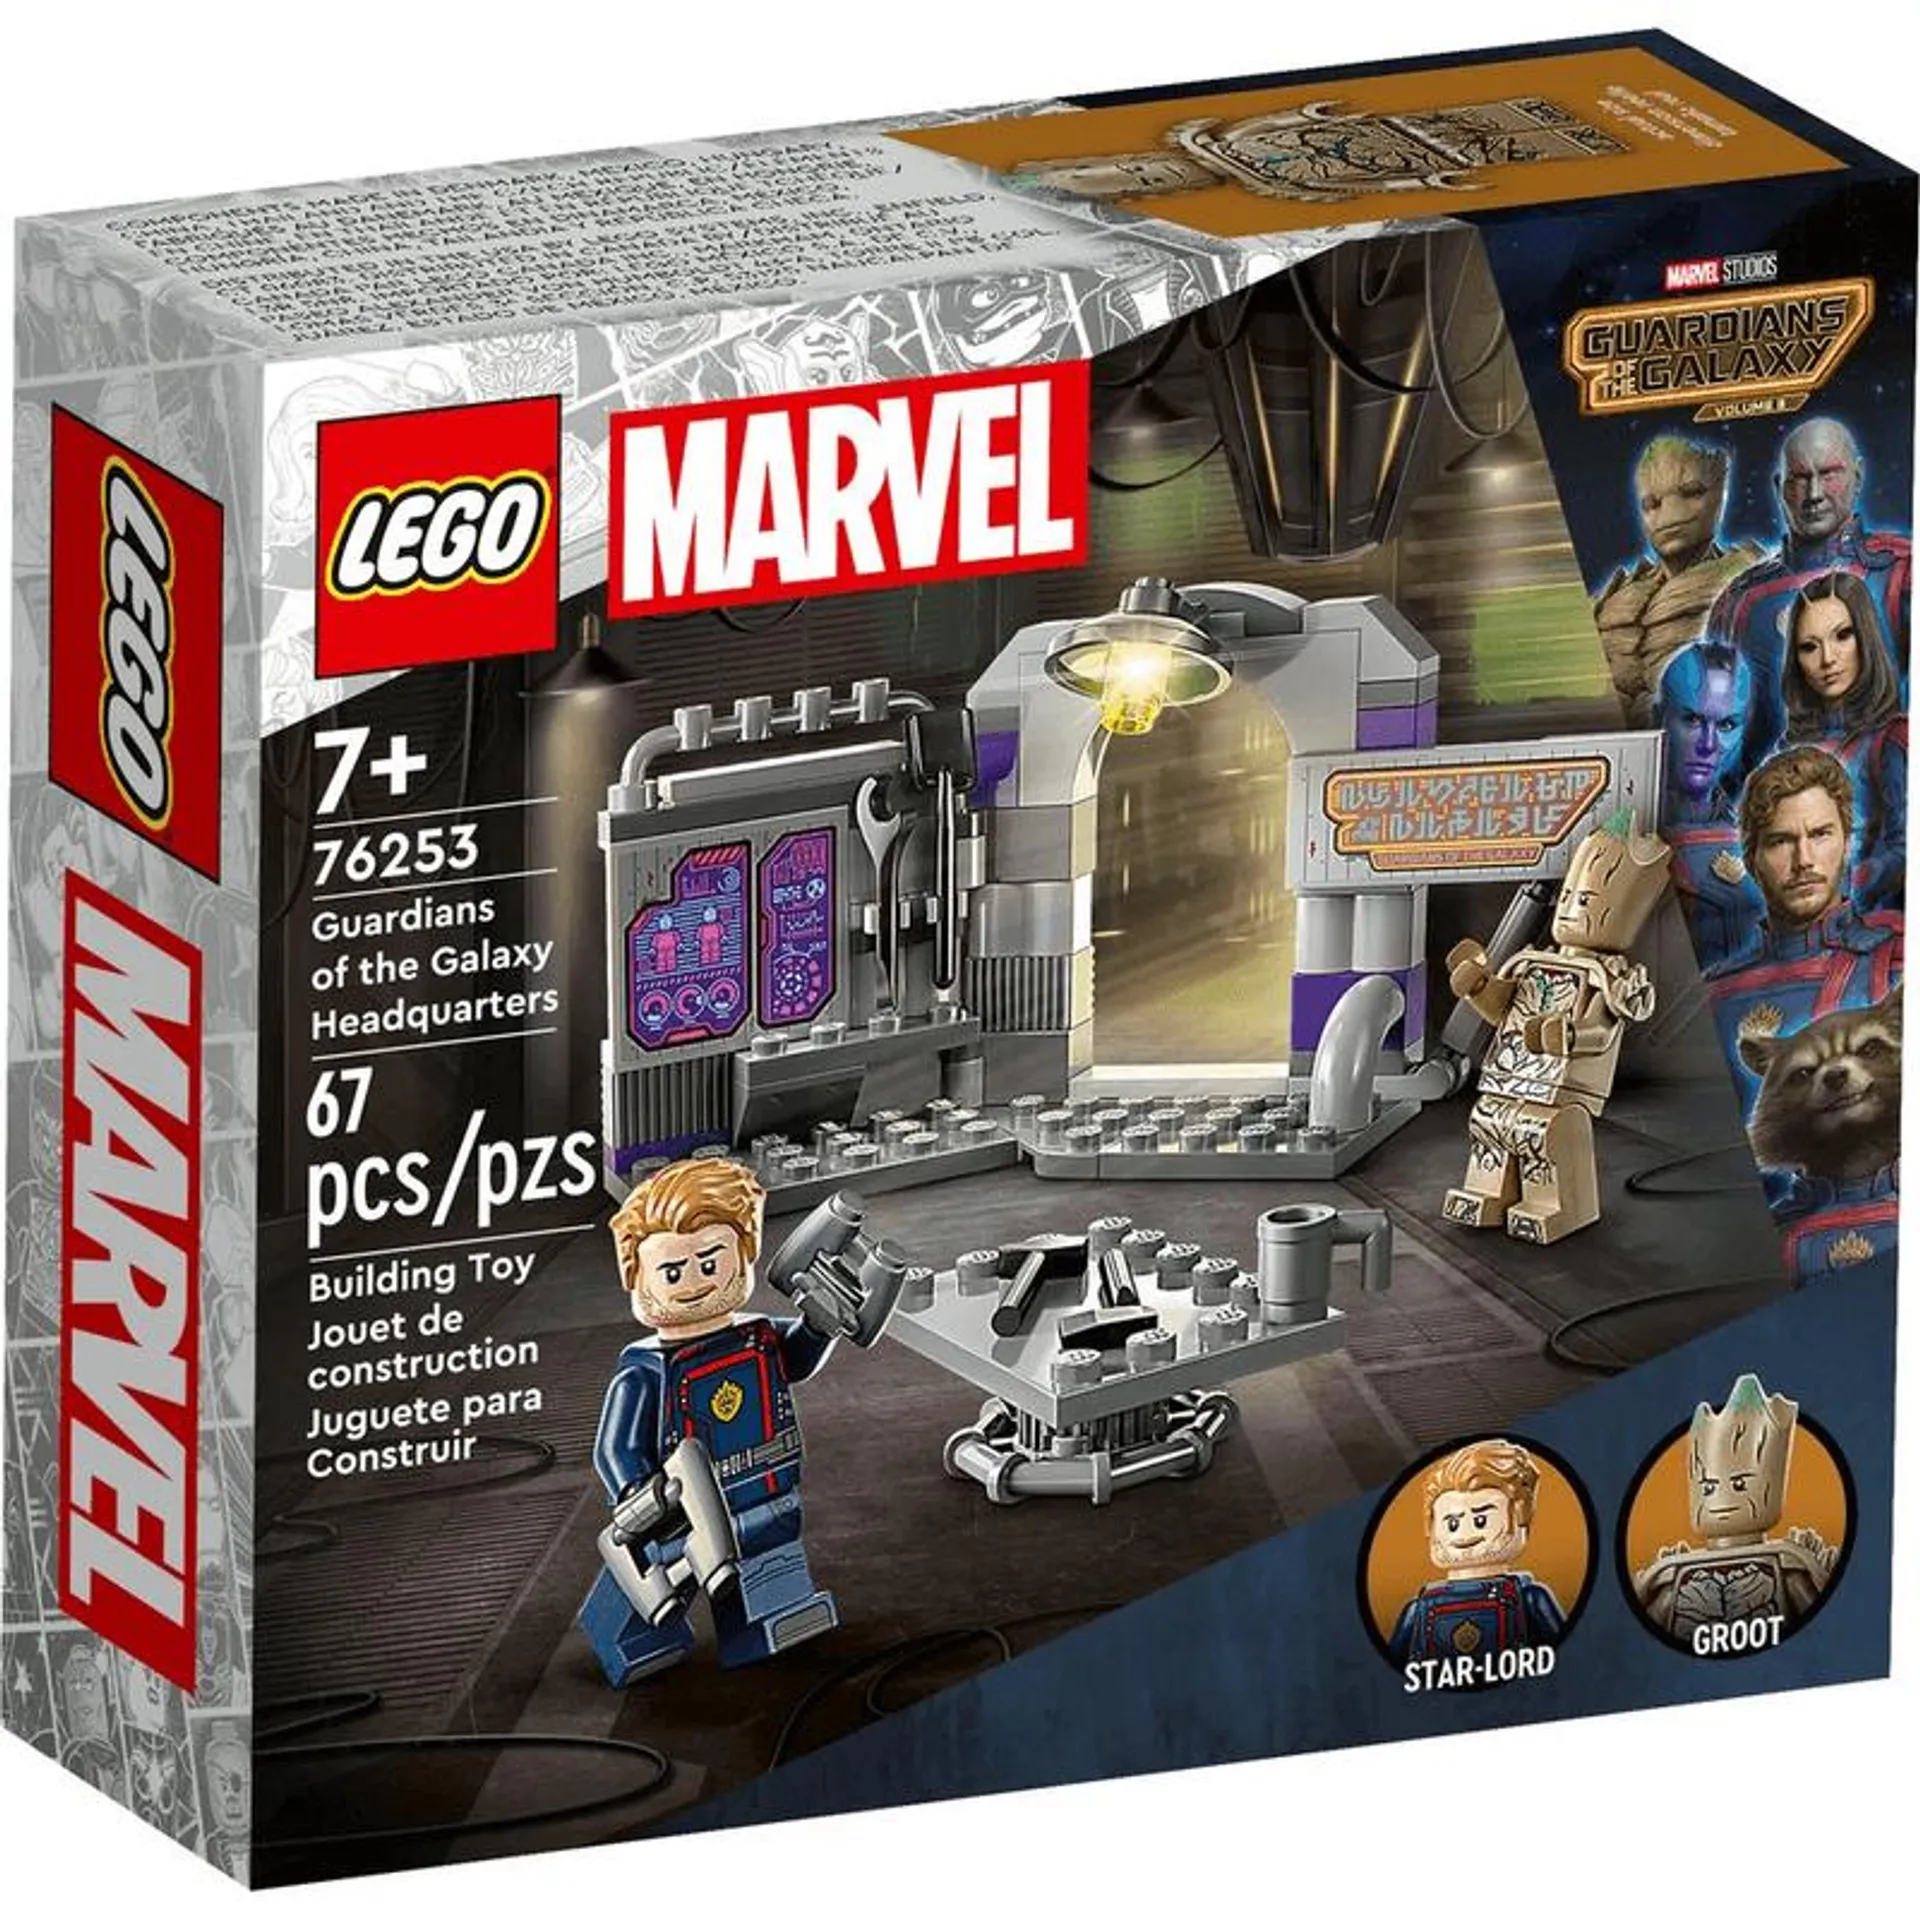 Lego Marvel Guardians of the Galaxy Headquarters Lego LE76253